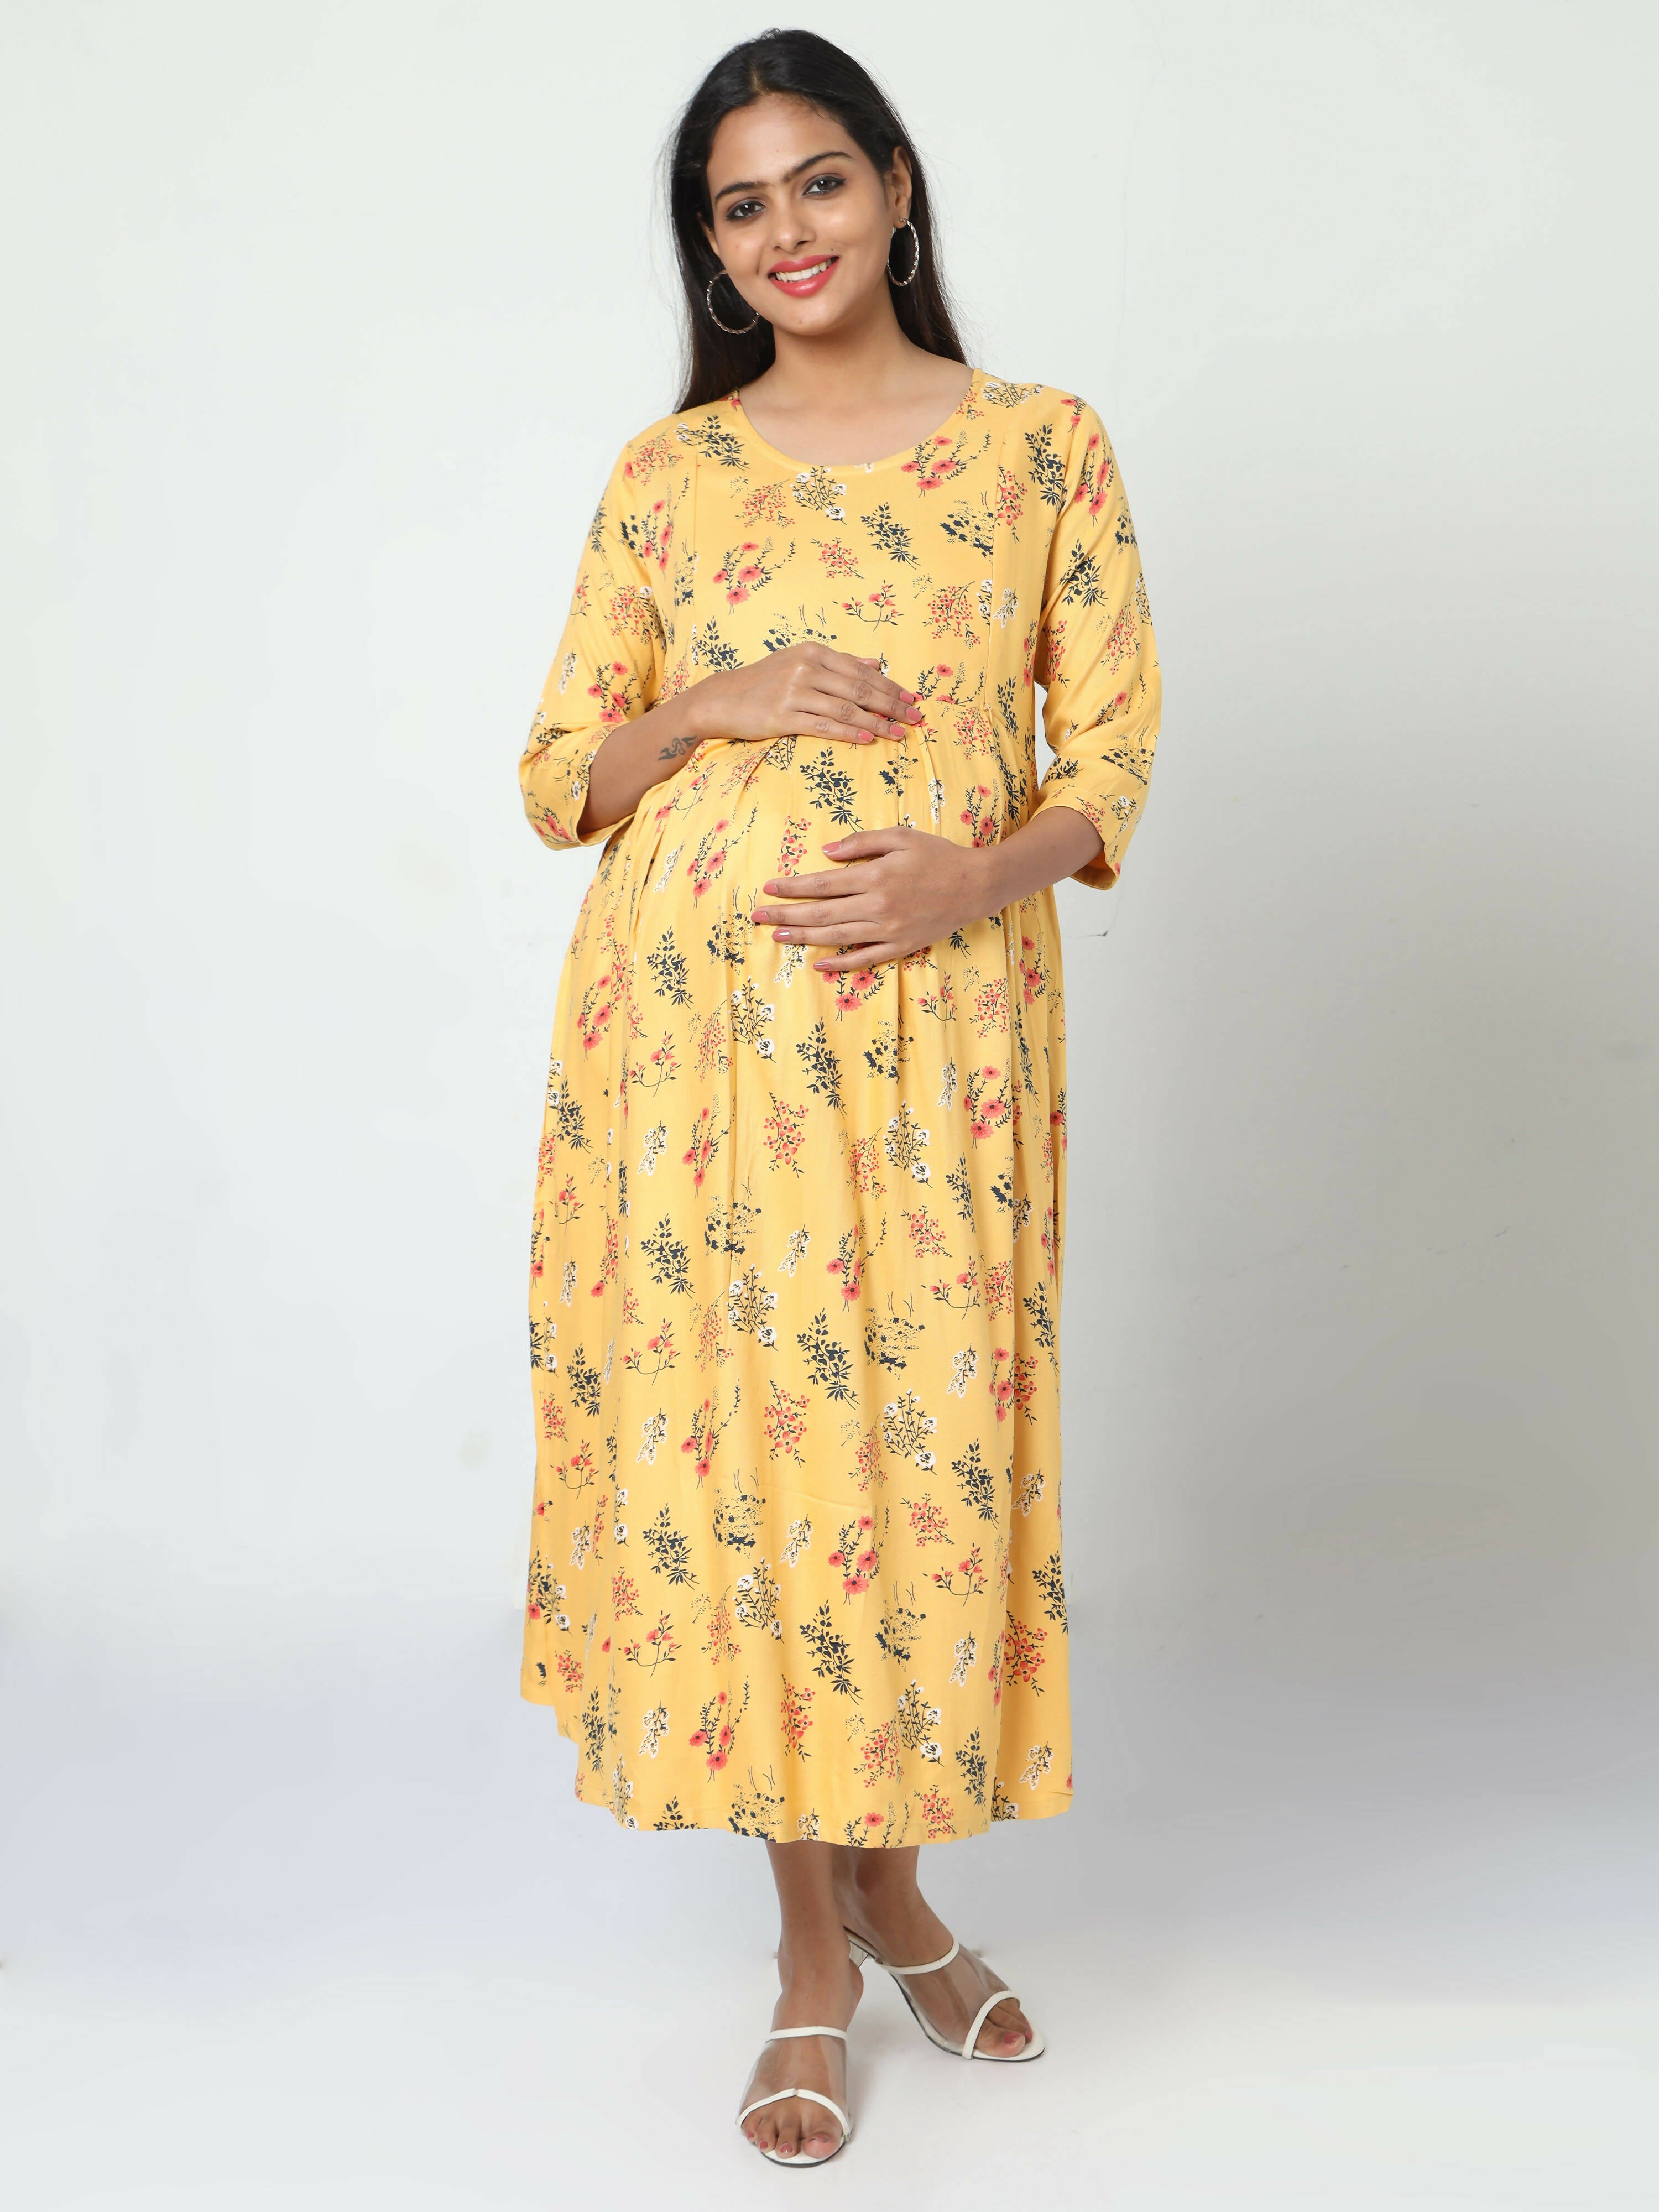 Feeding kurti | Breastfeeding fashion outfits, Feeding dresses, Stylish  maternity outfits